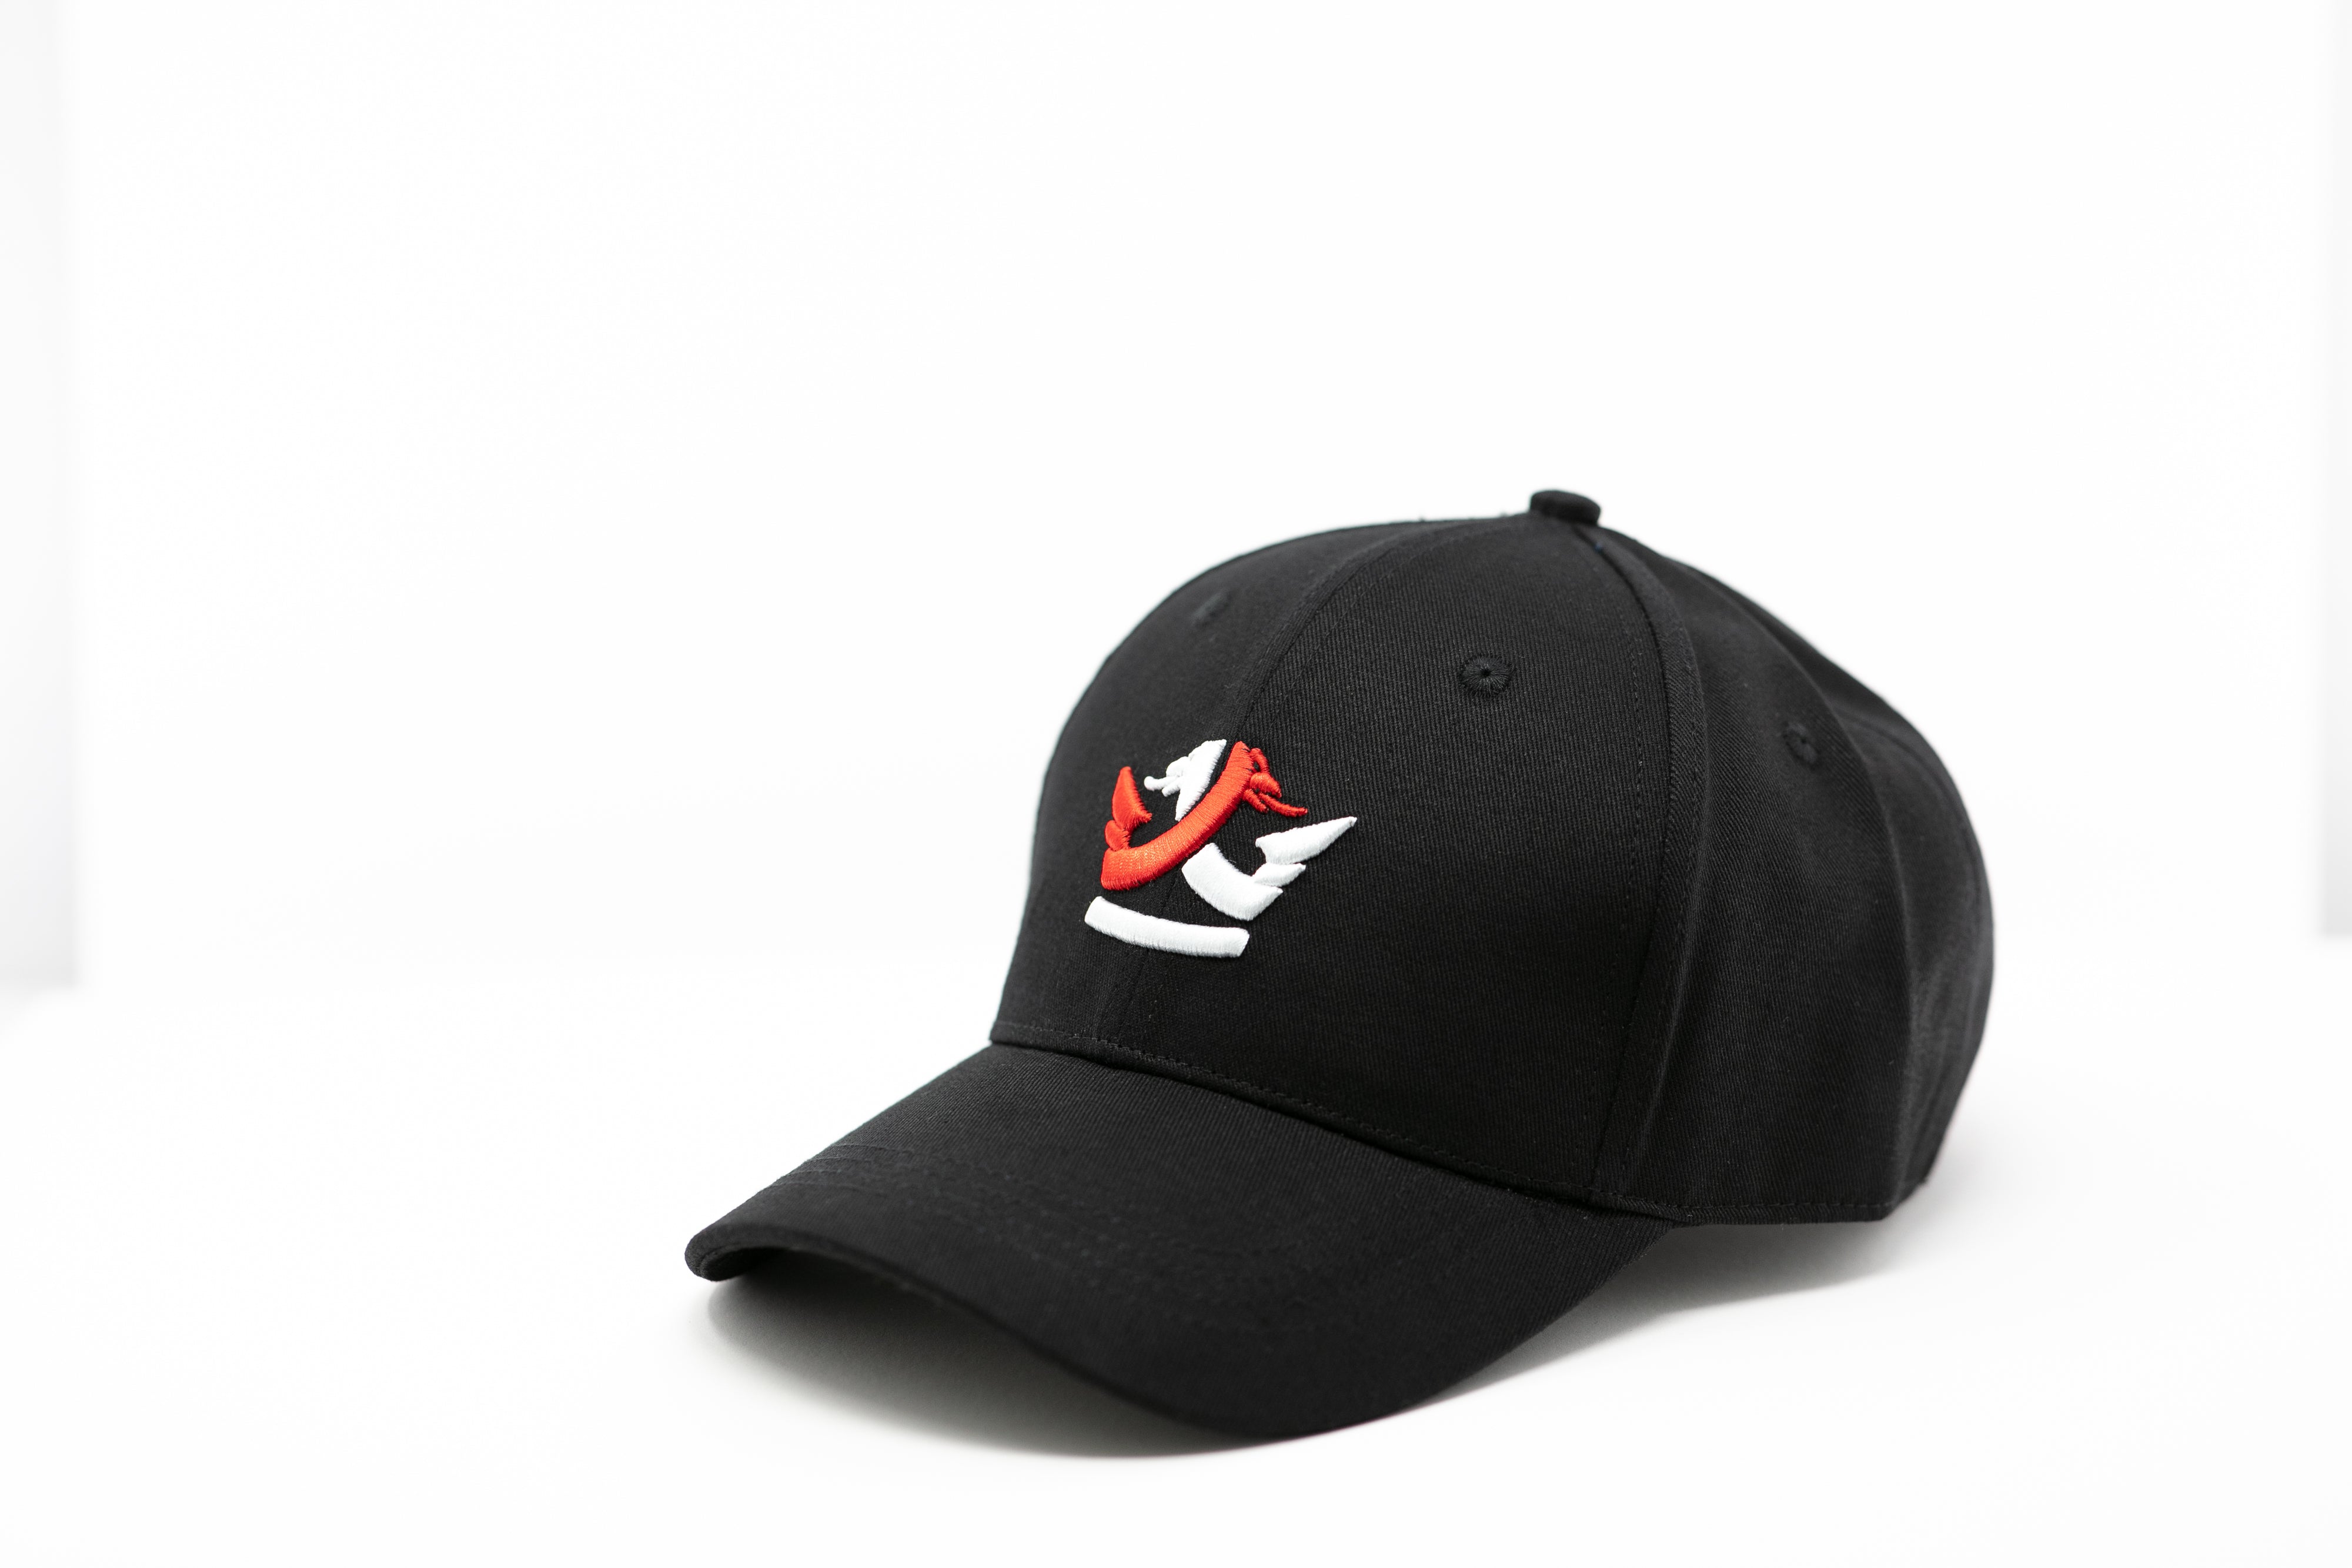 1st Edition Shq1pe Baseball Cap Black/ Red & White